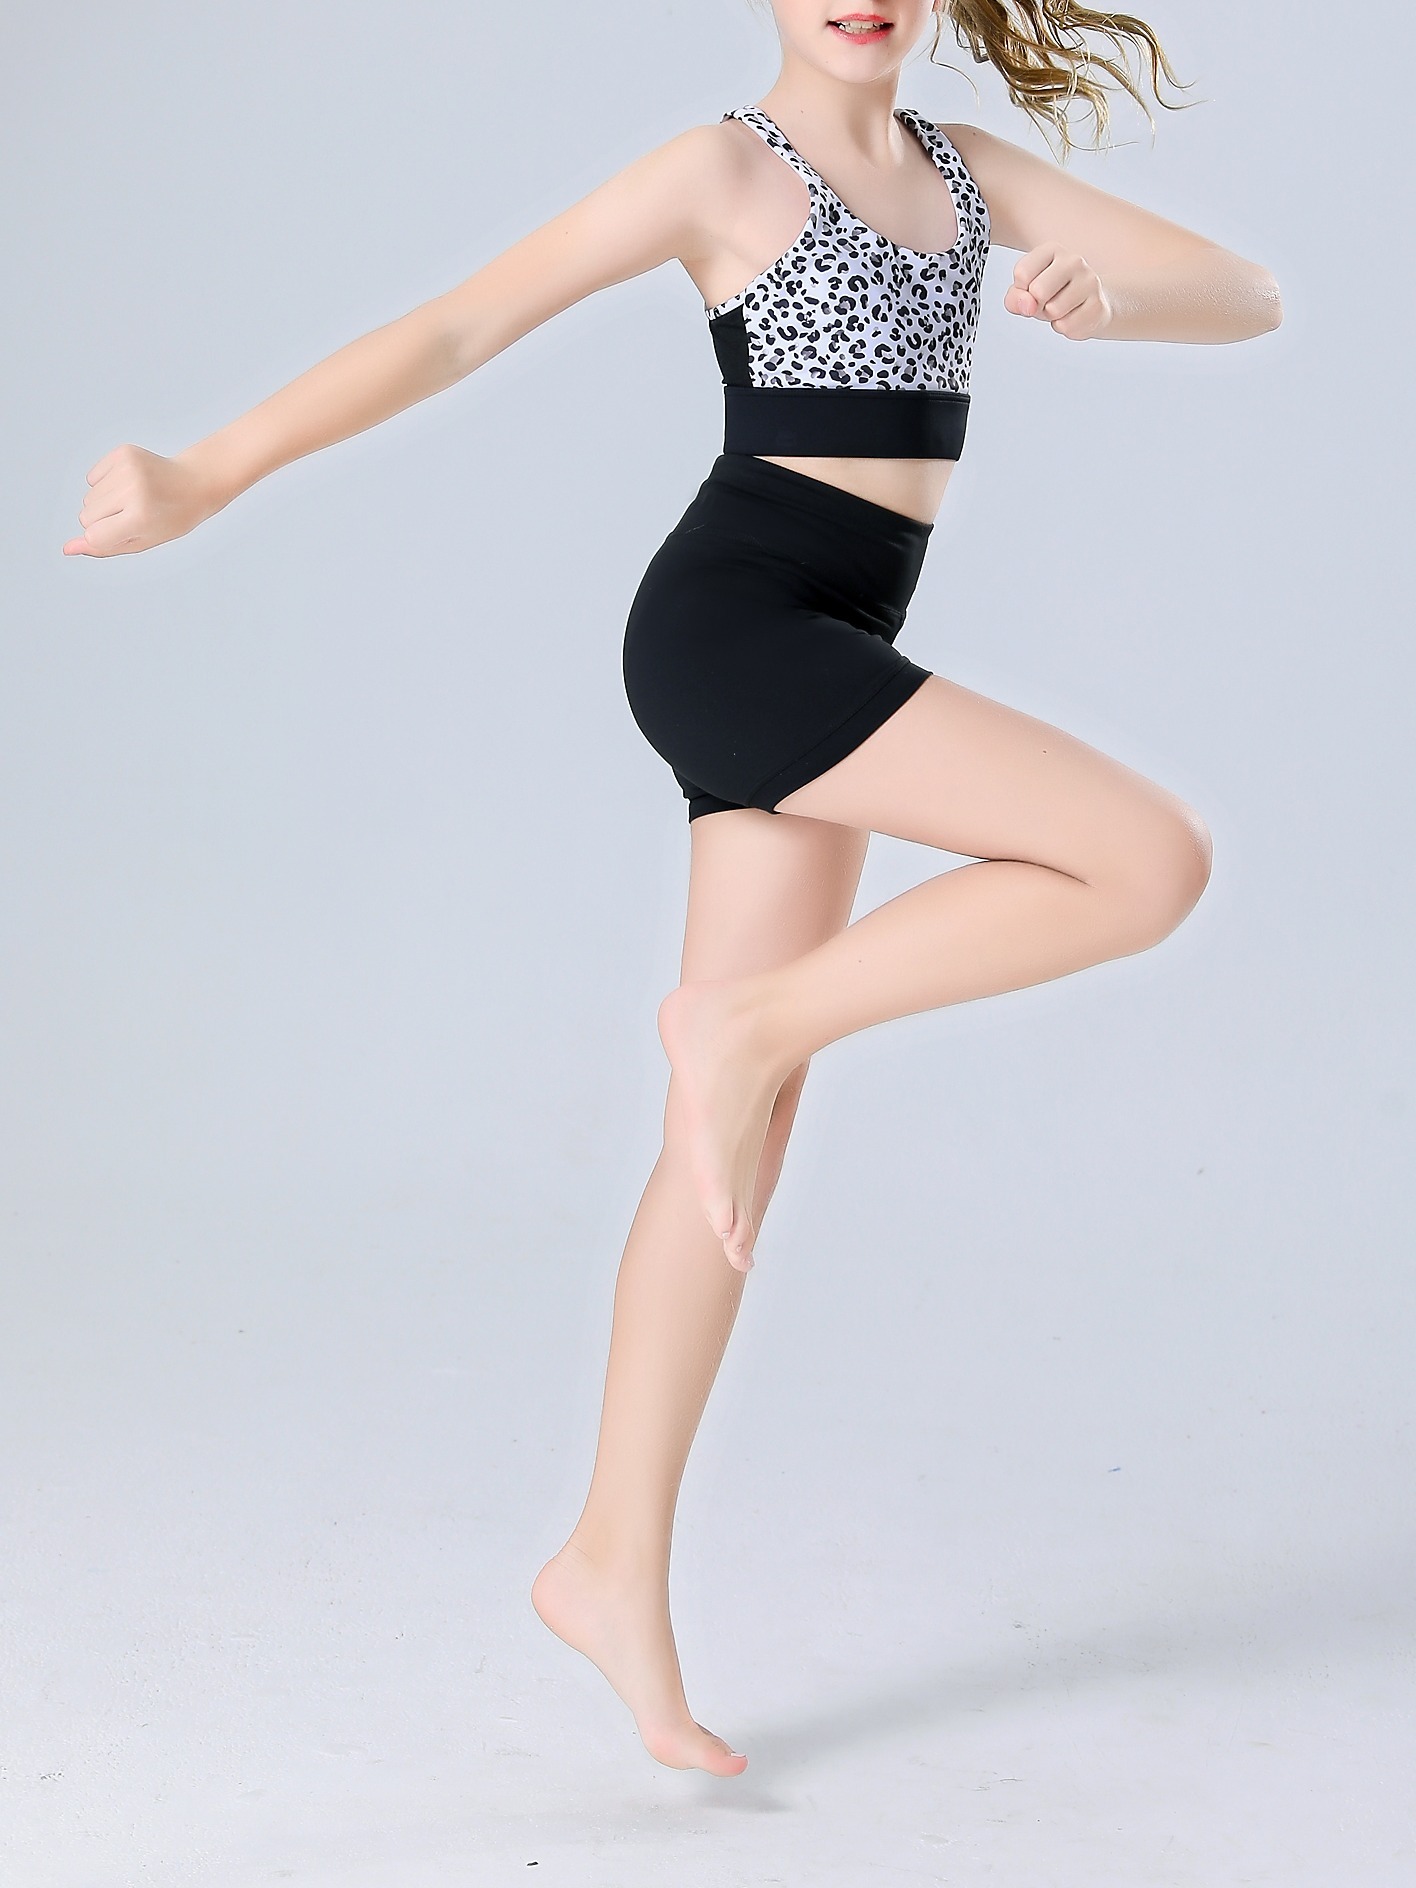 Gymnastics & Dance Shorts 7 High Waisted Yoga Shorts in Girls Sizes